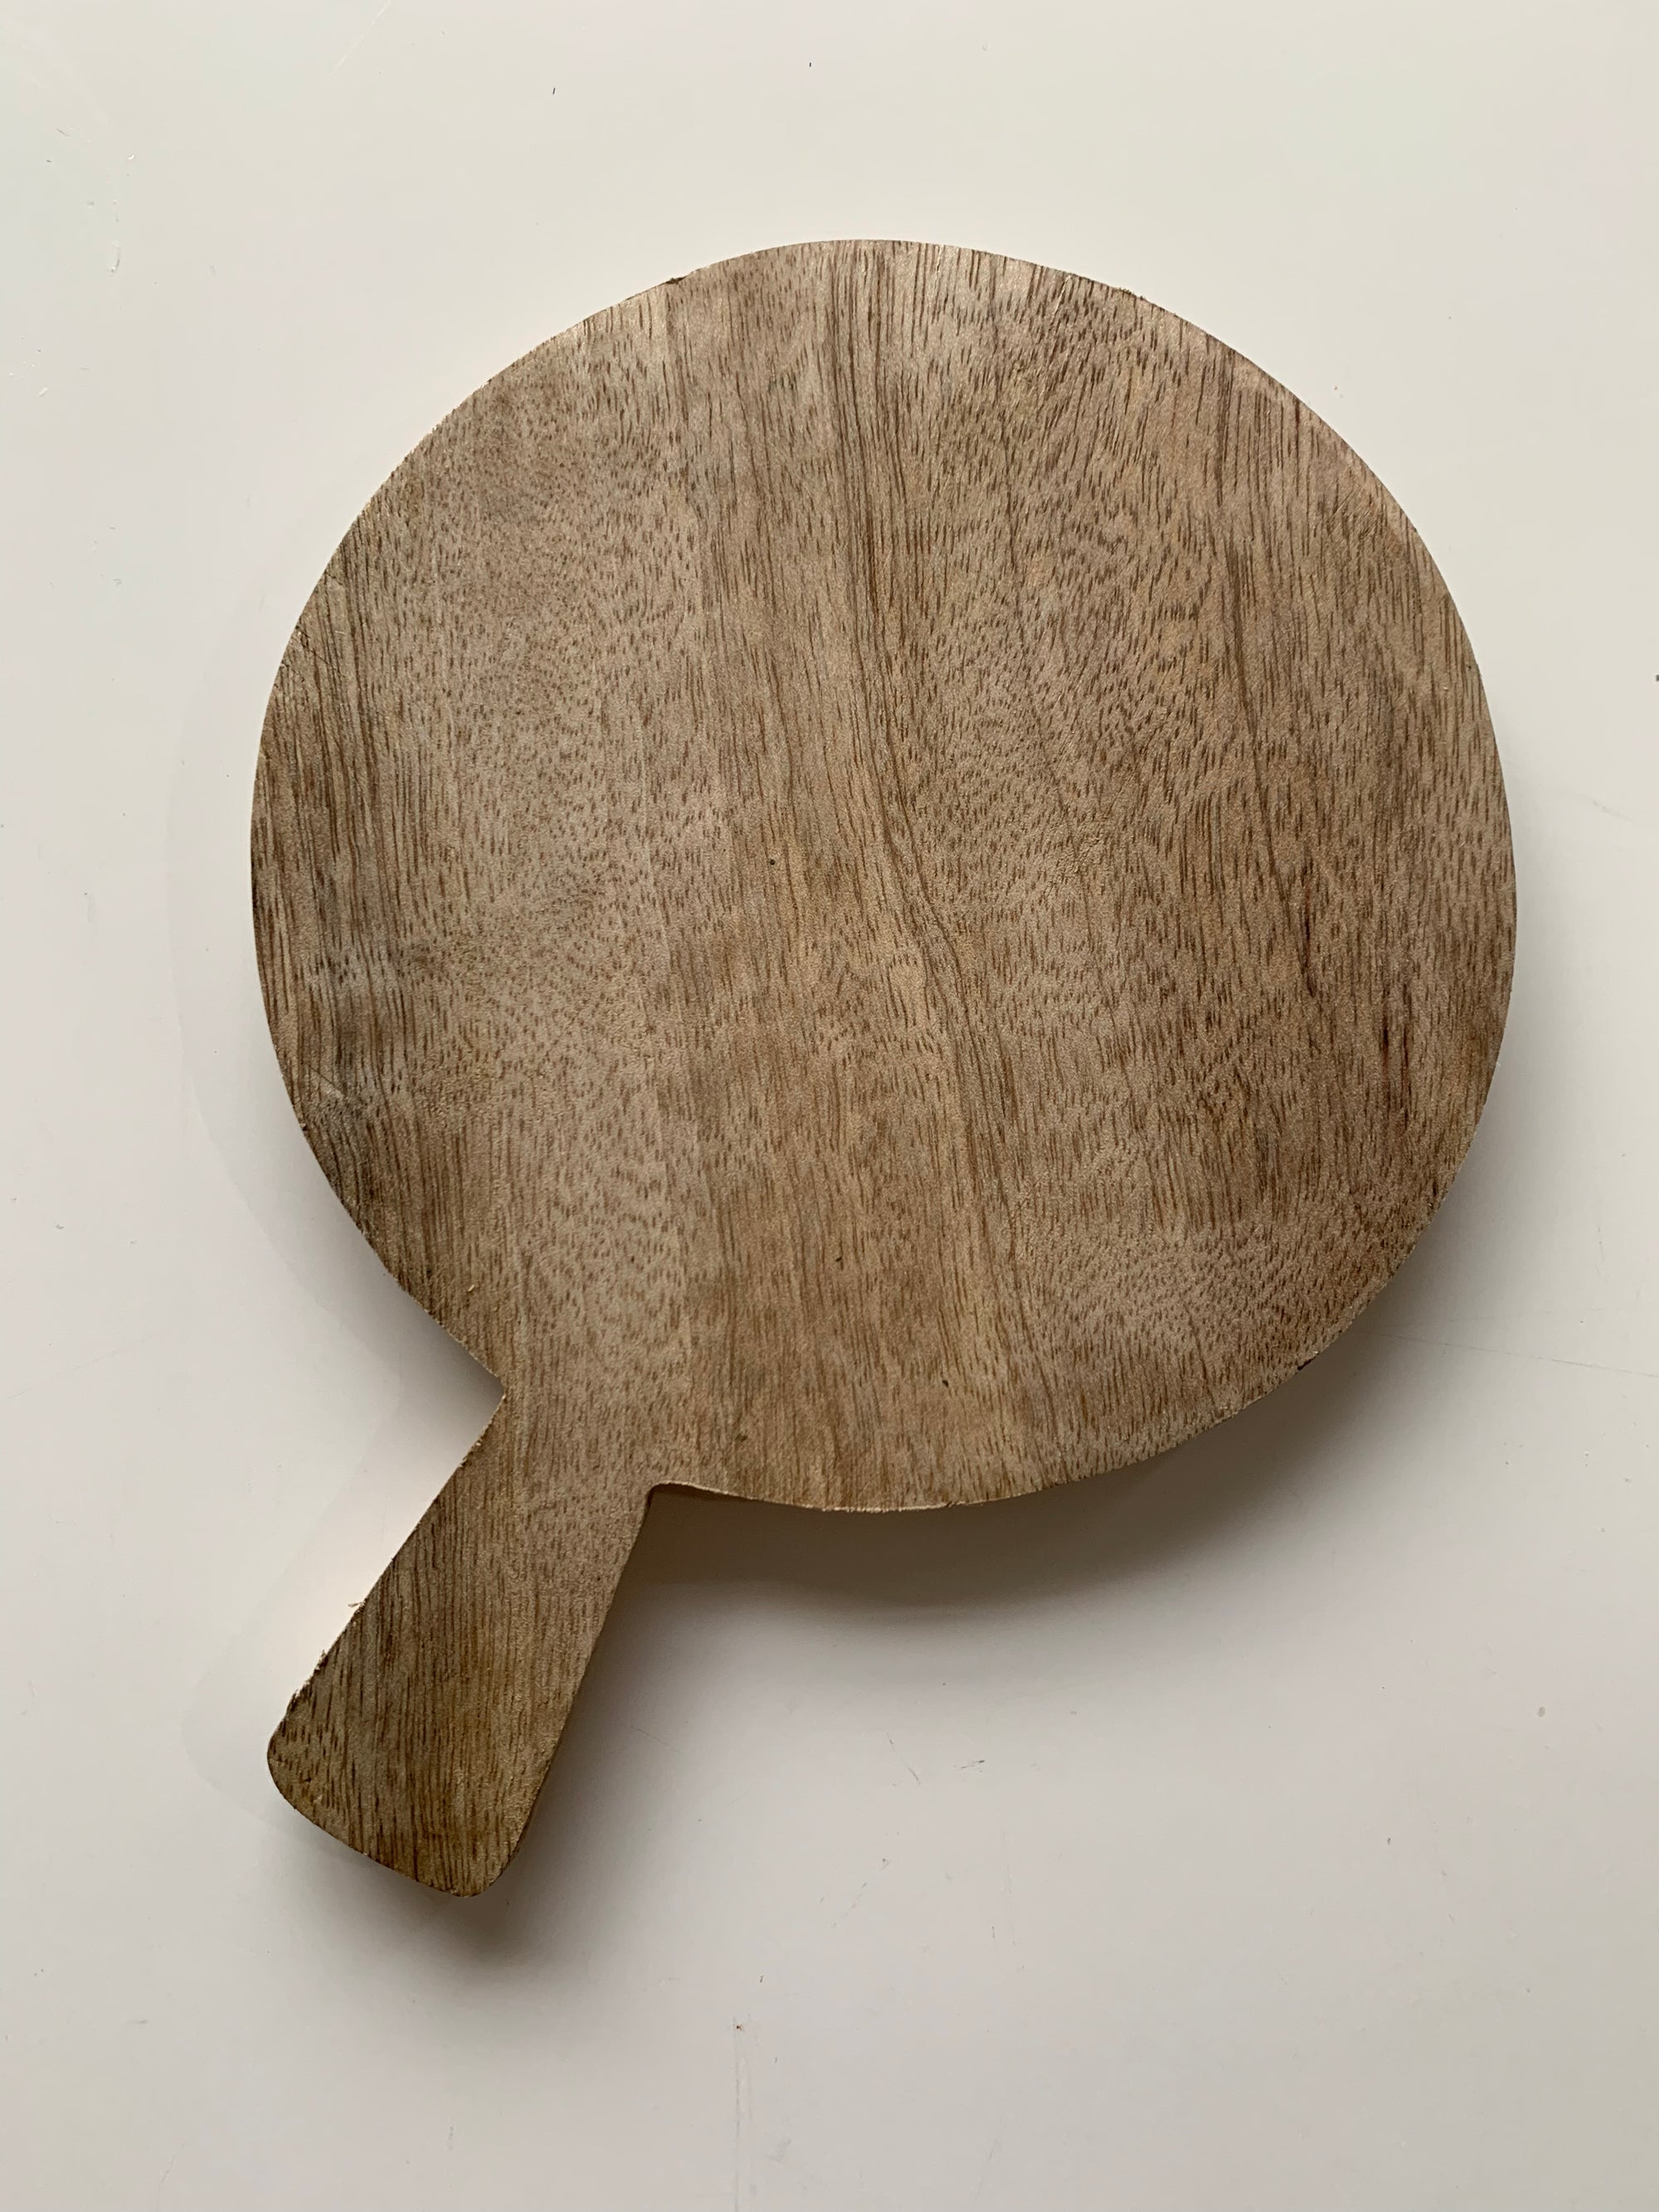 Small Circular Wooden Board